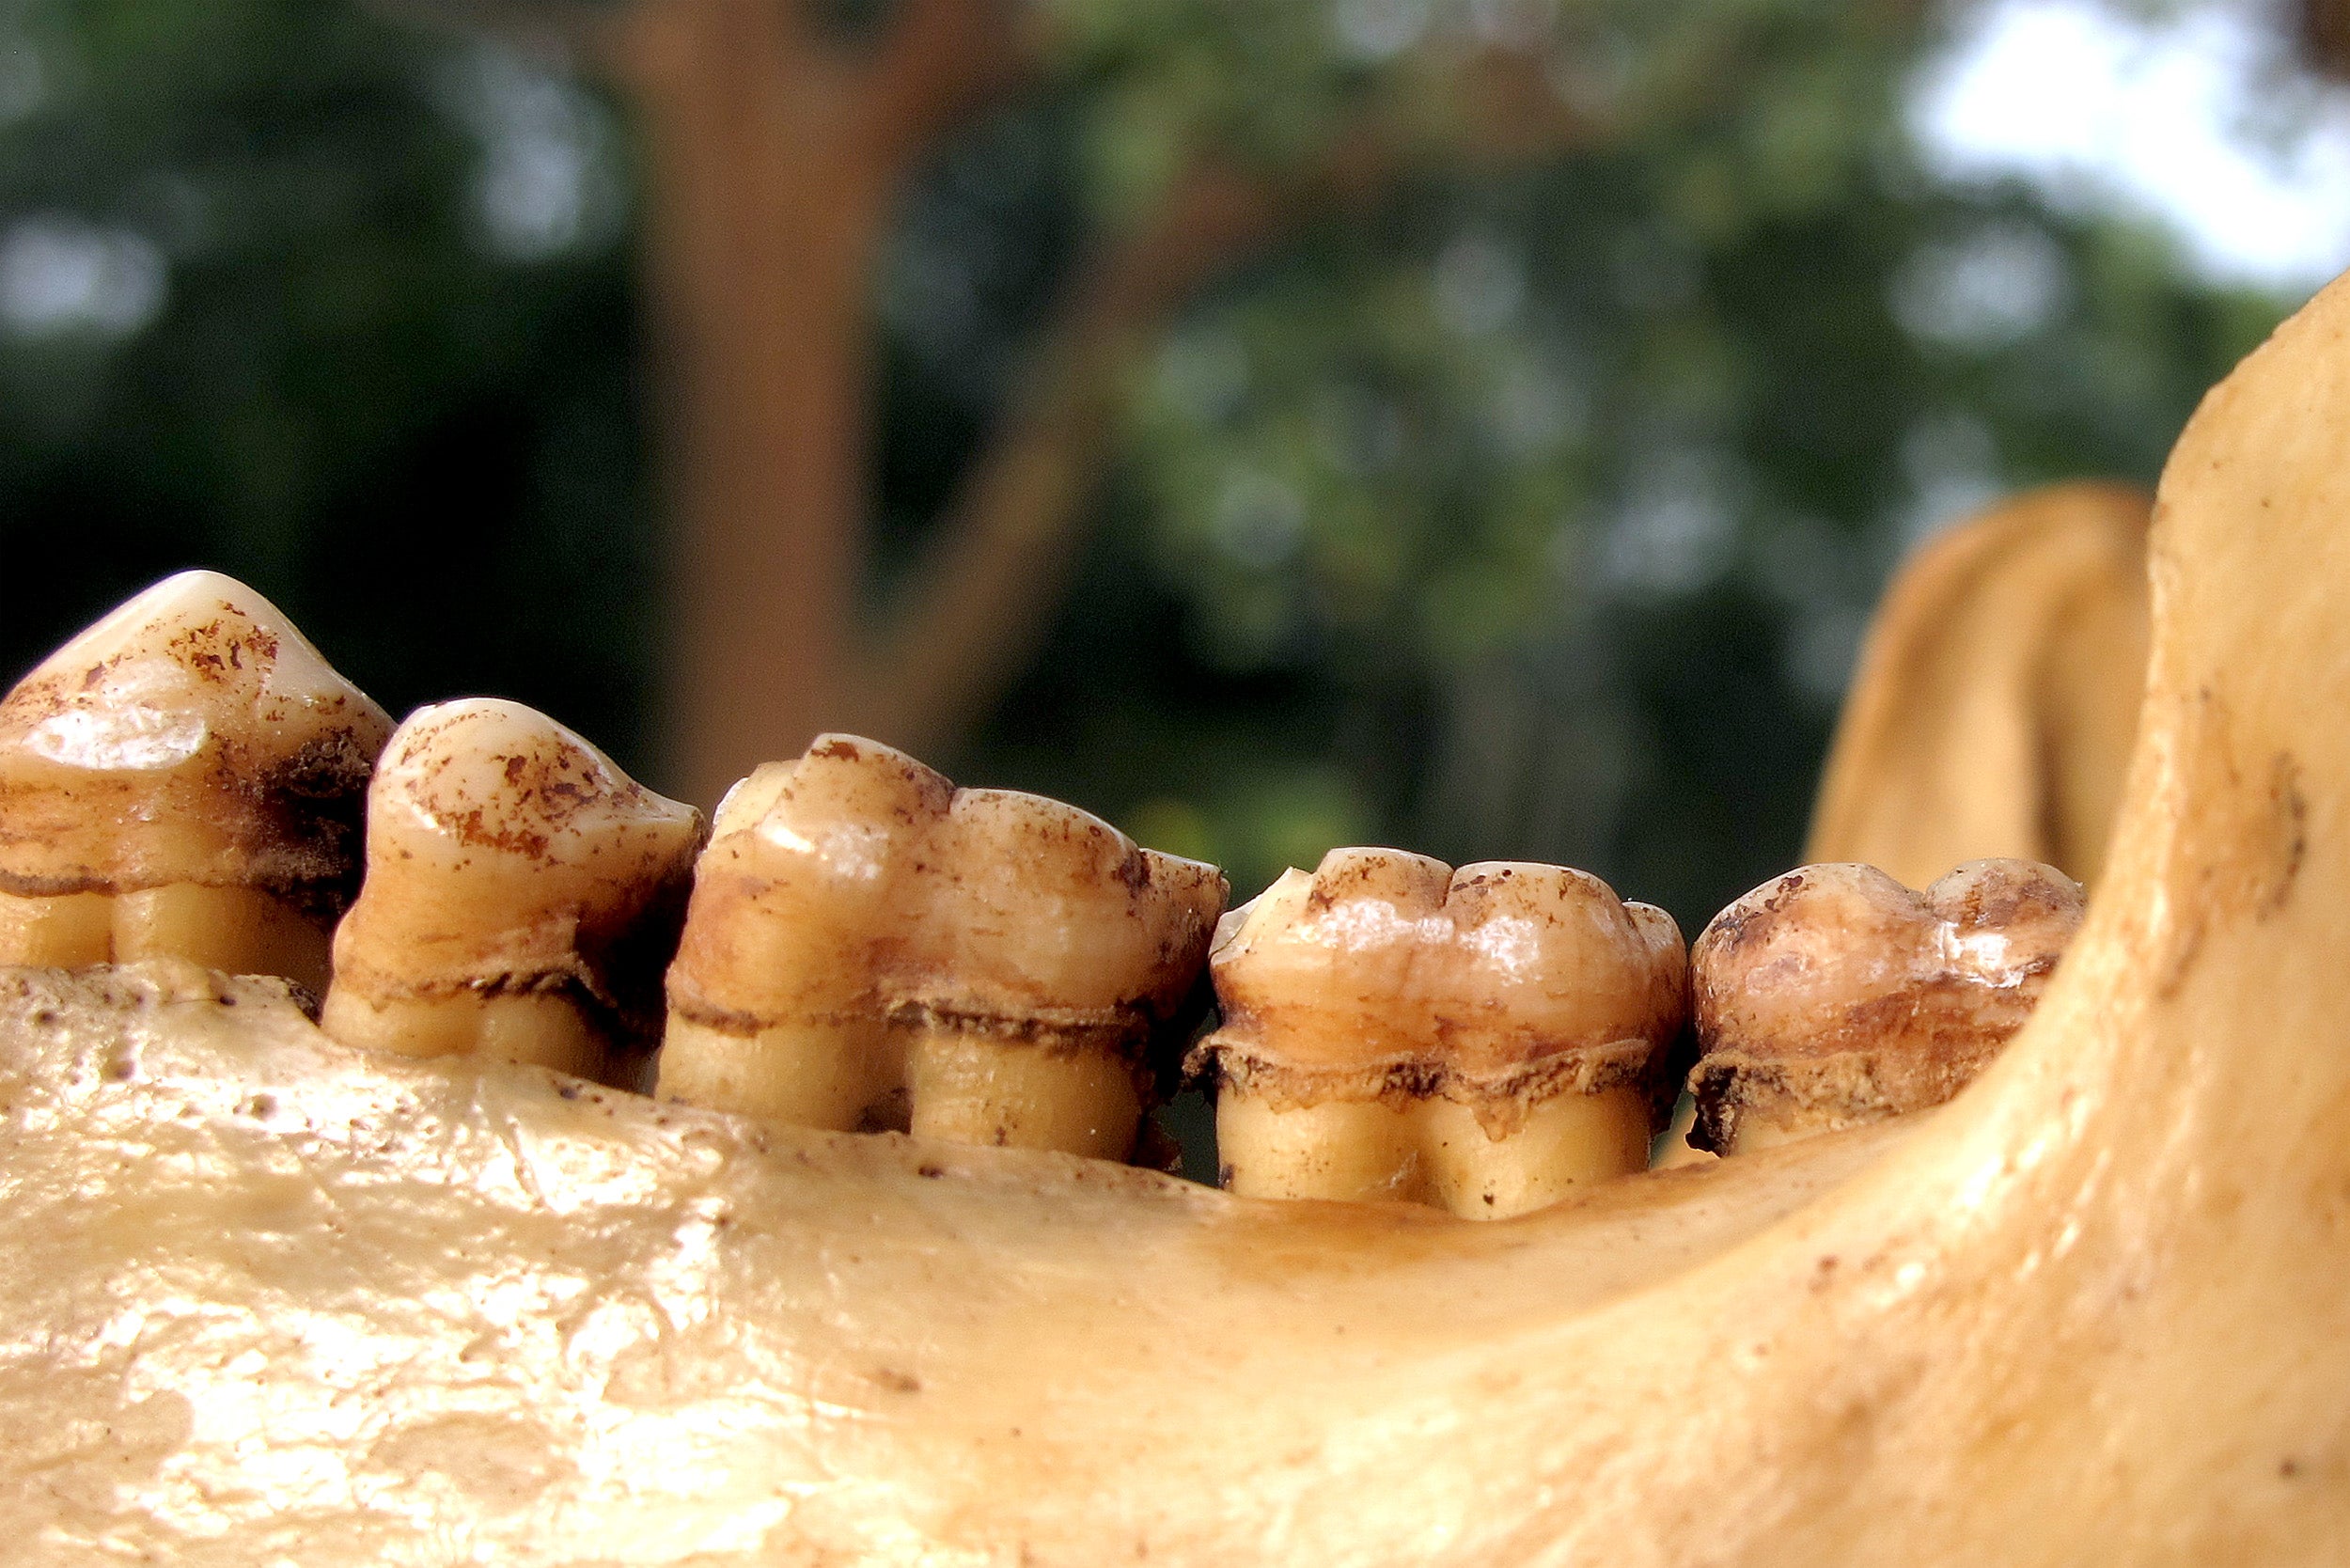 Close up of a row of Chimpanzee teeth.